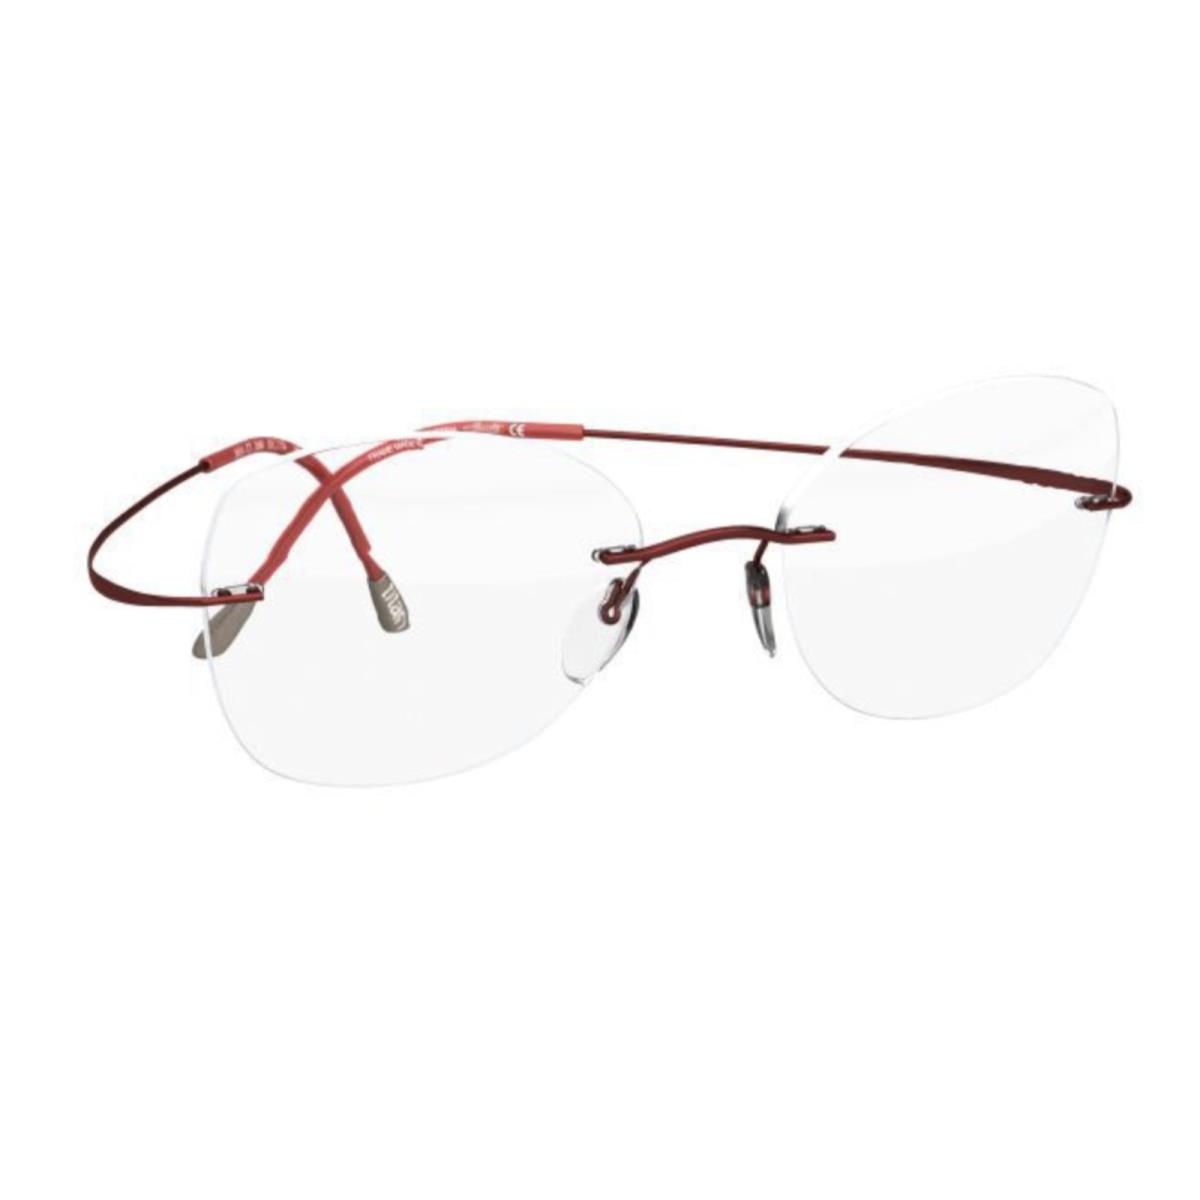 Silhouette Rimless Eyeglasses Titan Minimal Art Must 5515 CT 3040 Wine Red Frame